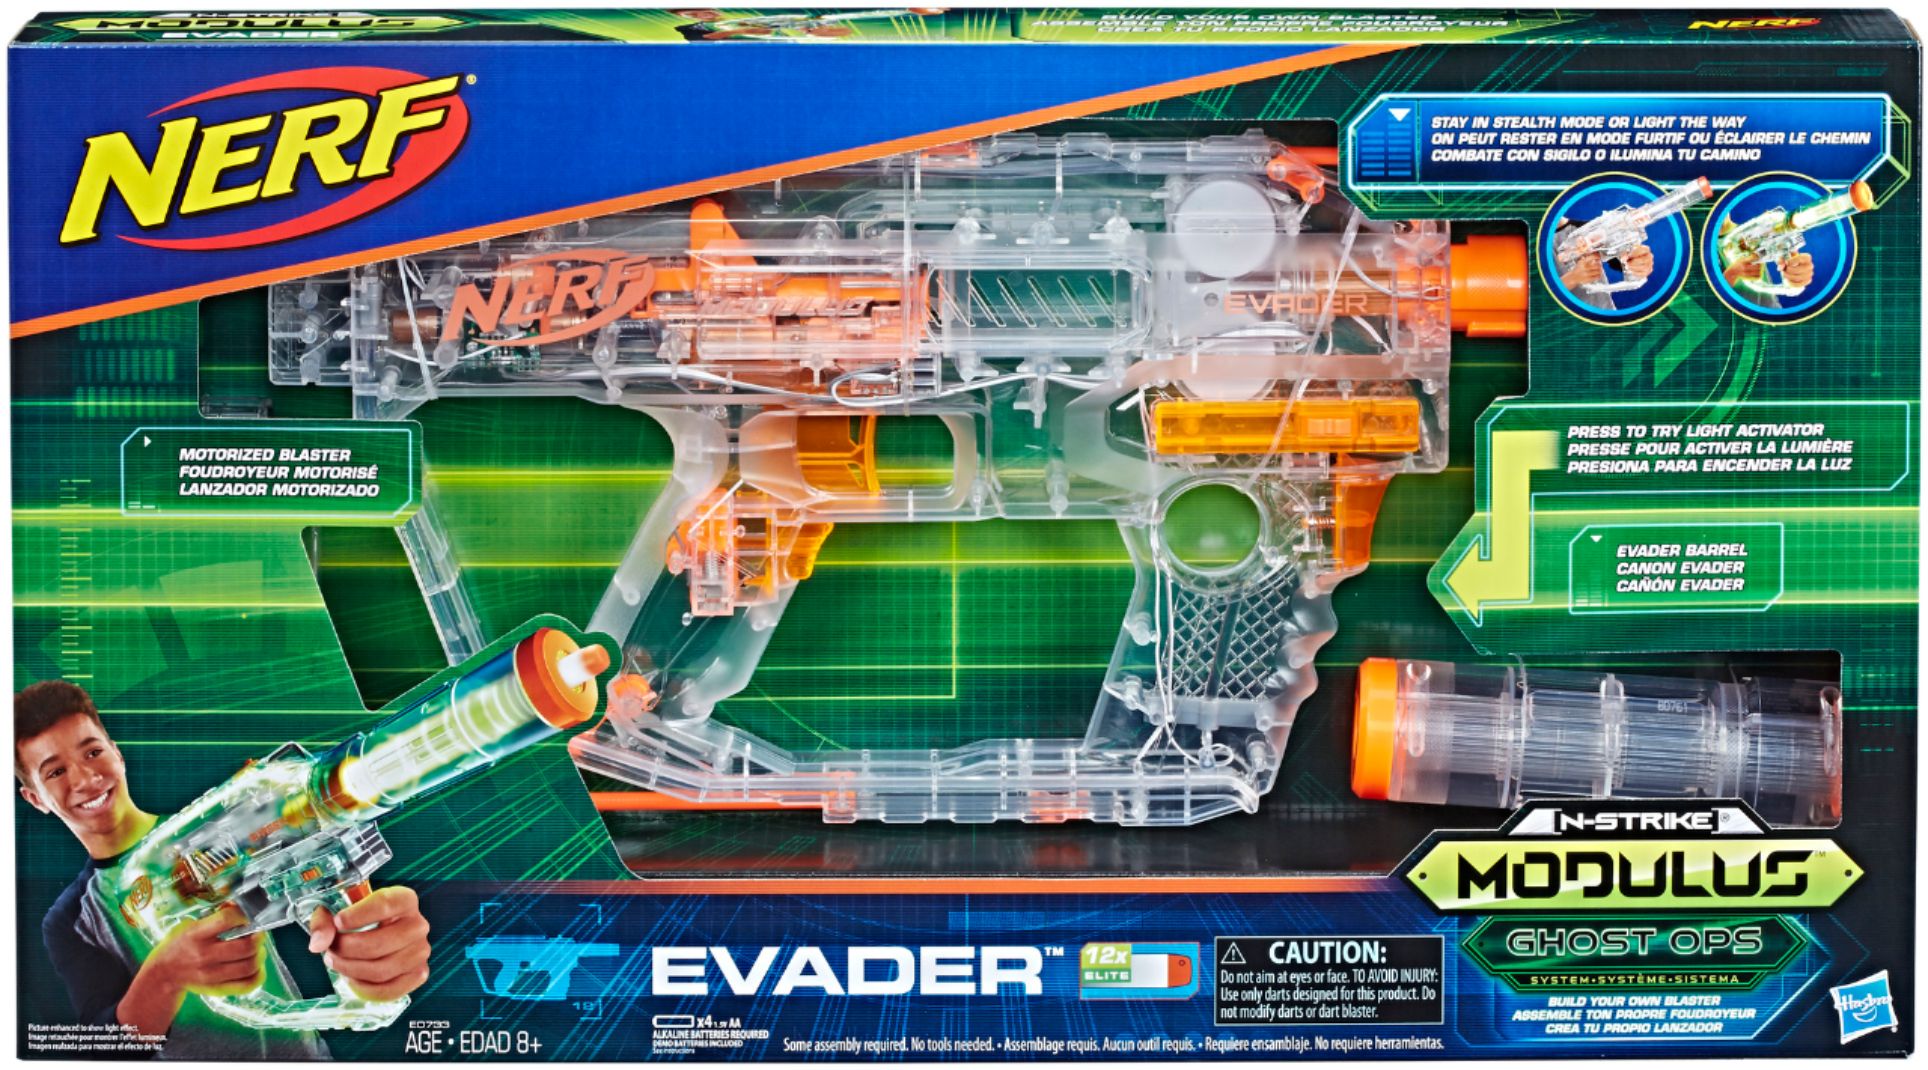 Nerf N Strike Arme Blaster Modulus Chost Ops Evader et Fléchette Hasbro E0733EU4 